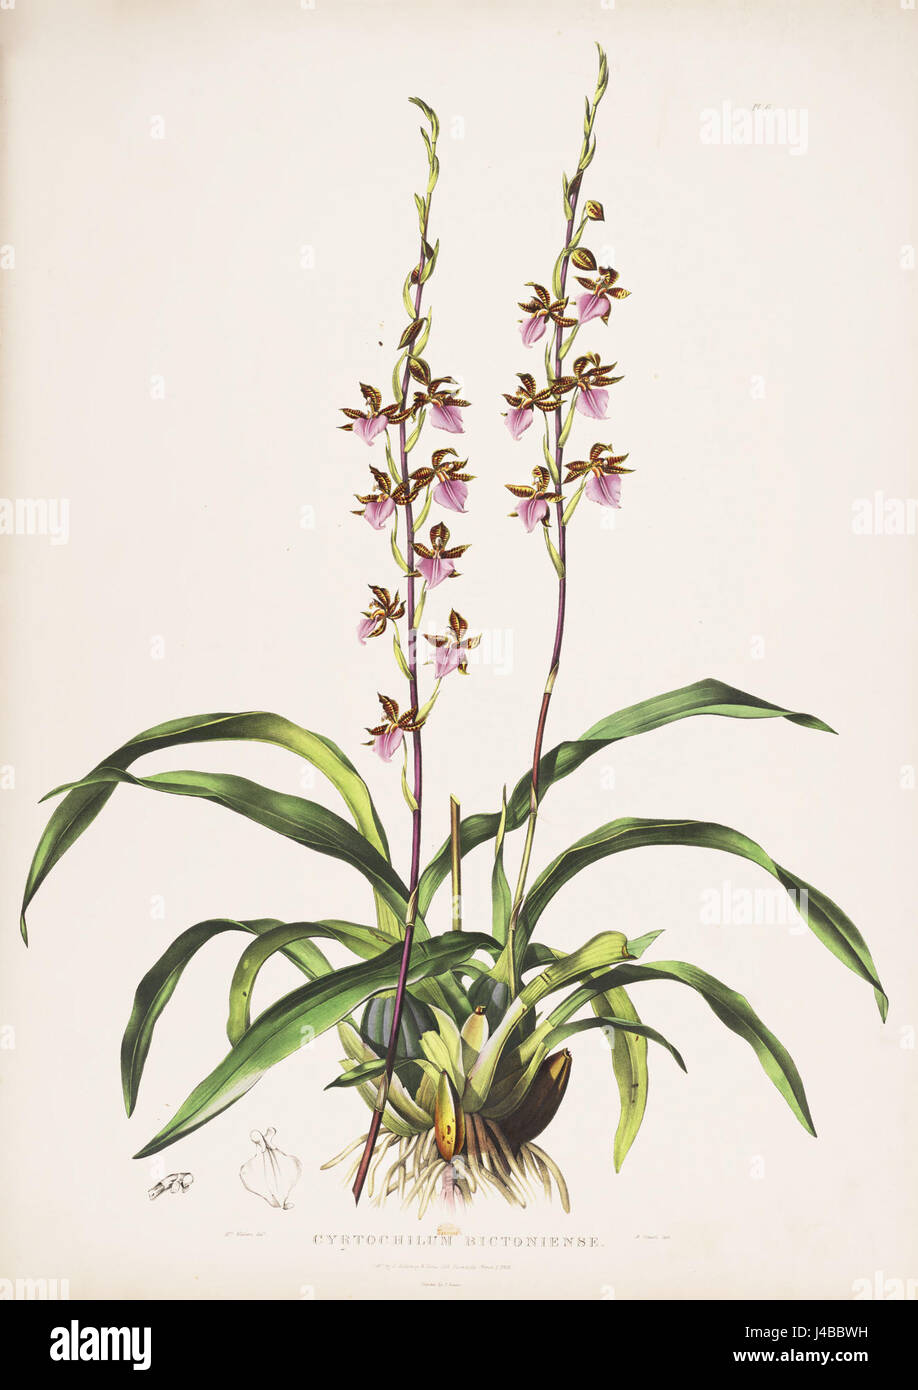 Rhynchostele bictoniensis (as Cyrtochilum bictoniense) Bateman Orch. Mex. Guat. pl. 6 (1842) Stock Photo